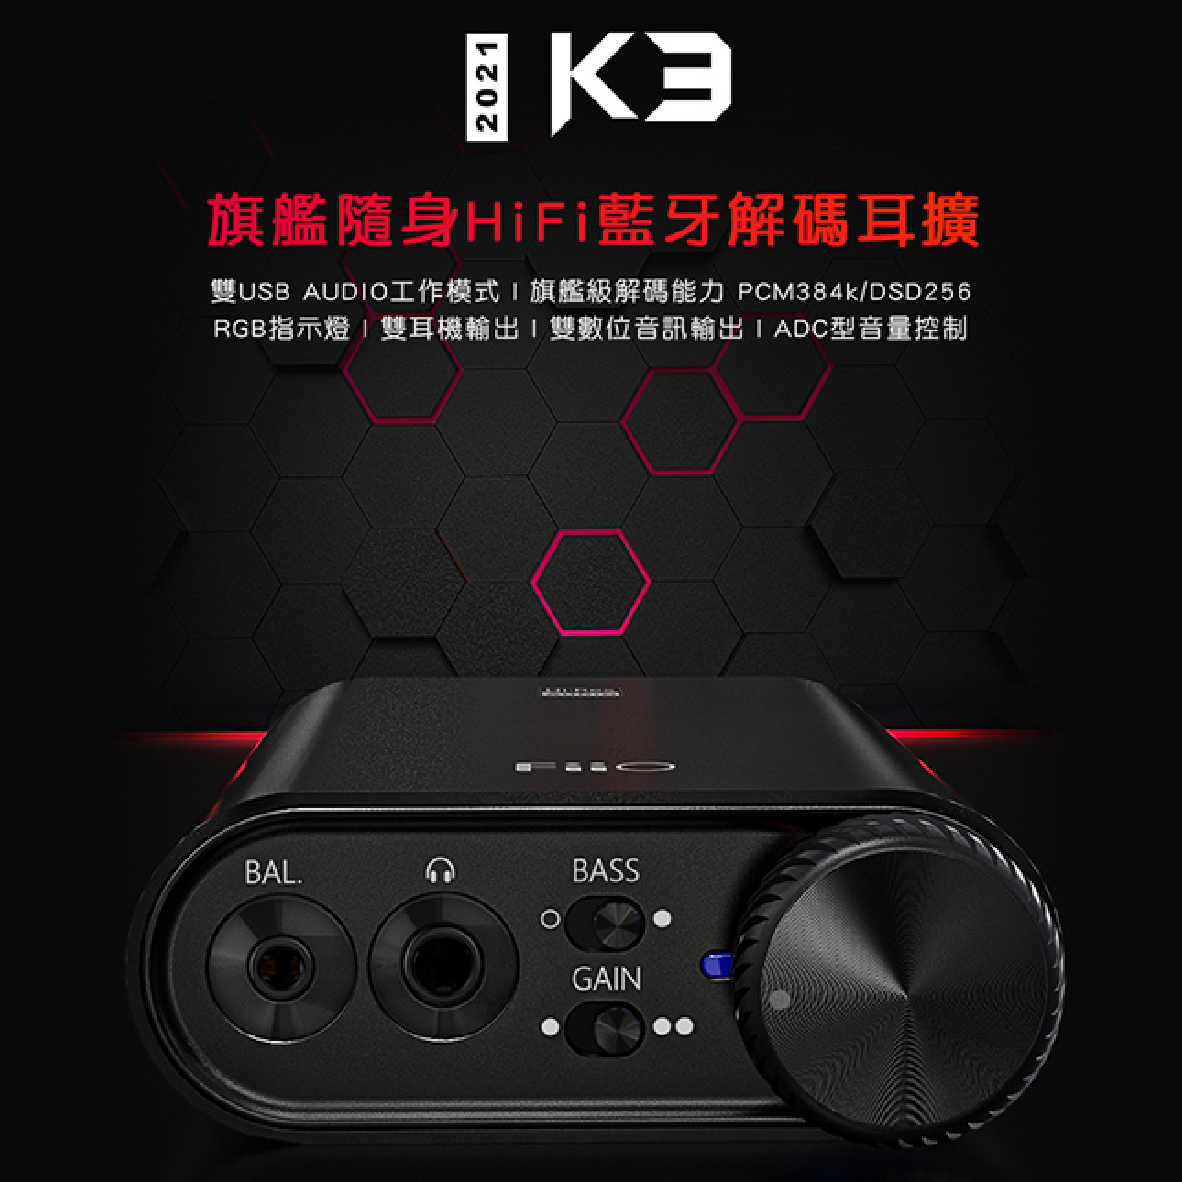 Fiio K3 2021新版 USB 雙數位輸出 DAC耳機功率 擴大器 | Ｍy Ear 耳機專門店